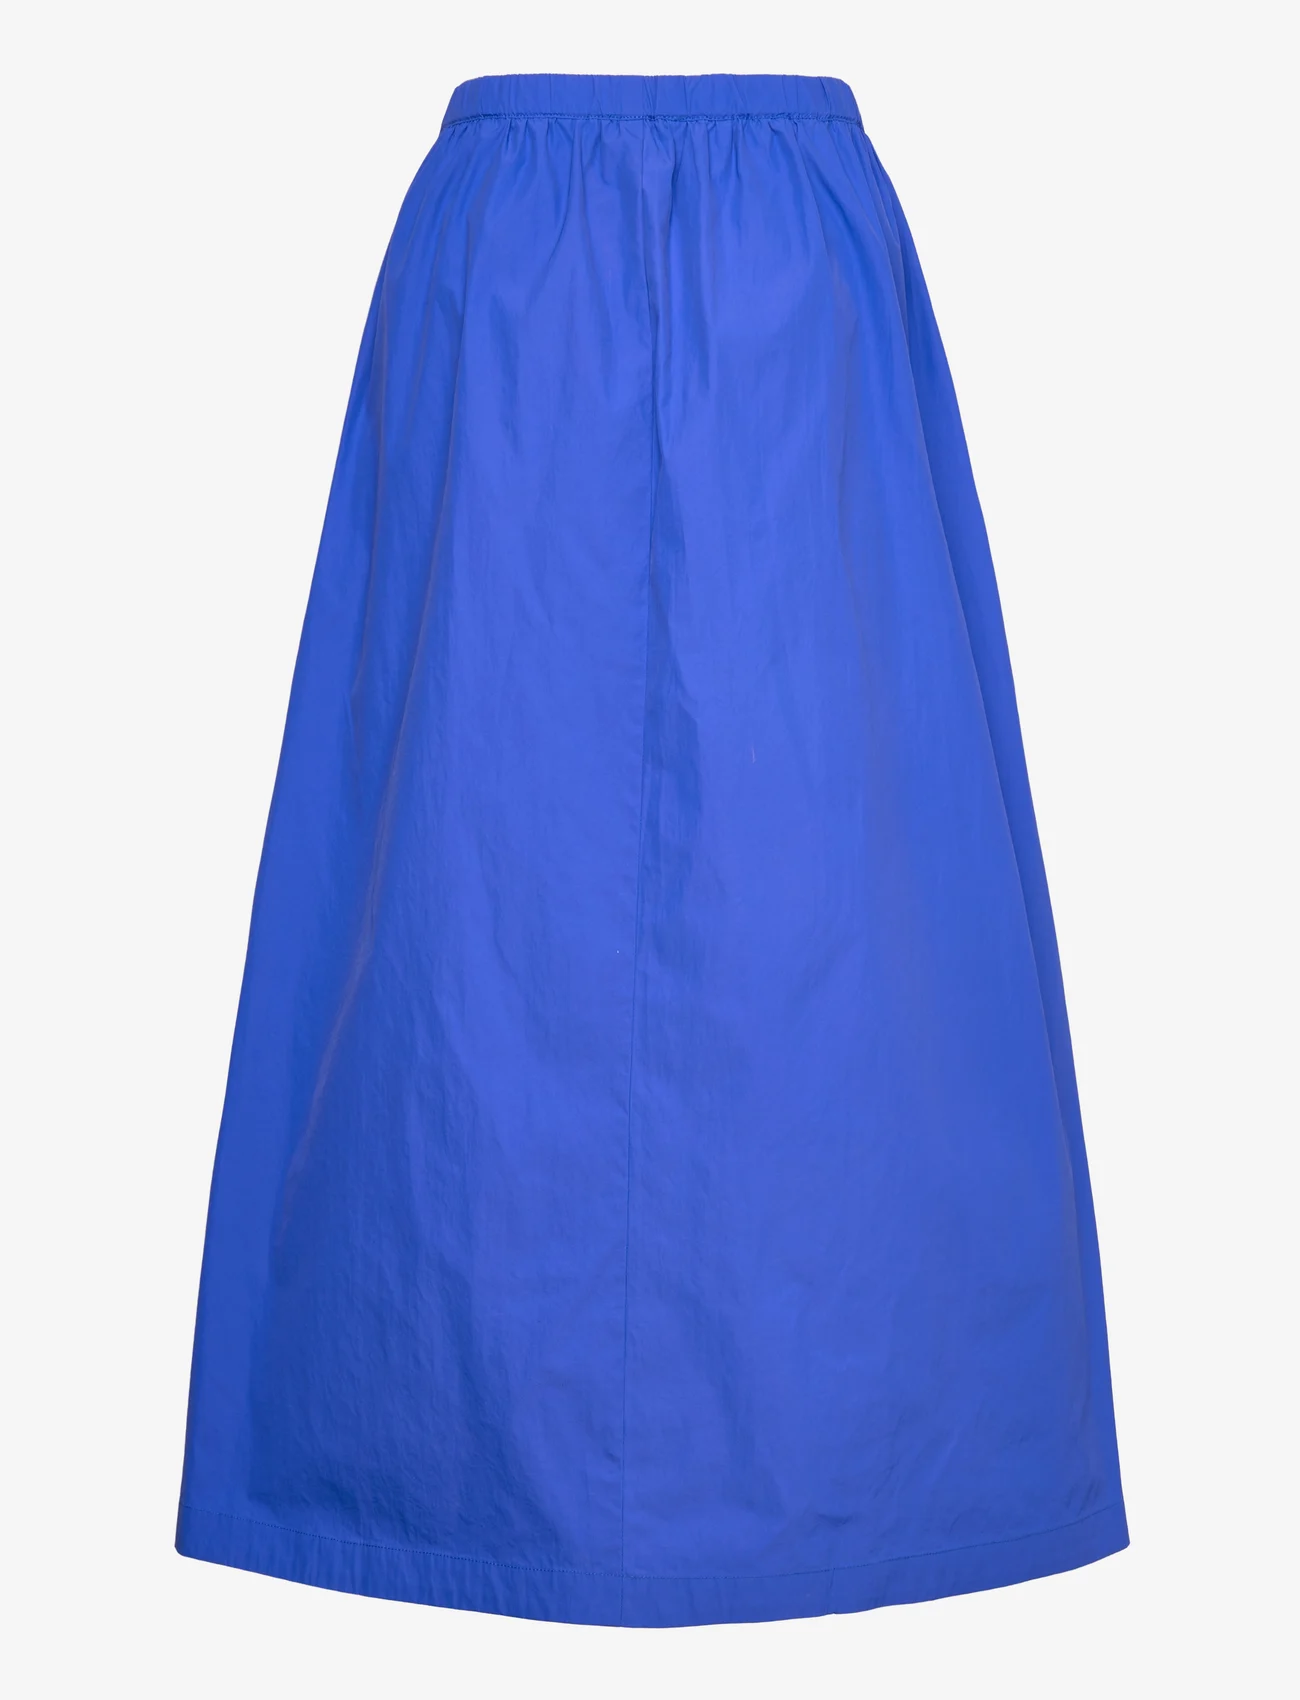 NORR - Nicole maxi skirt - ibiza blue - 1